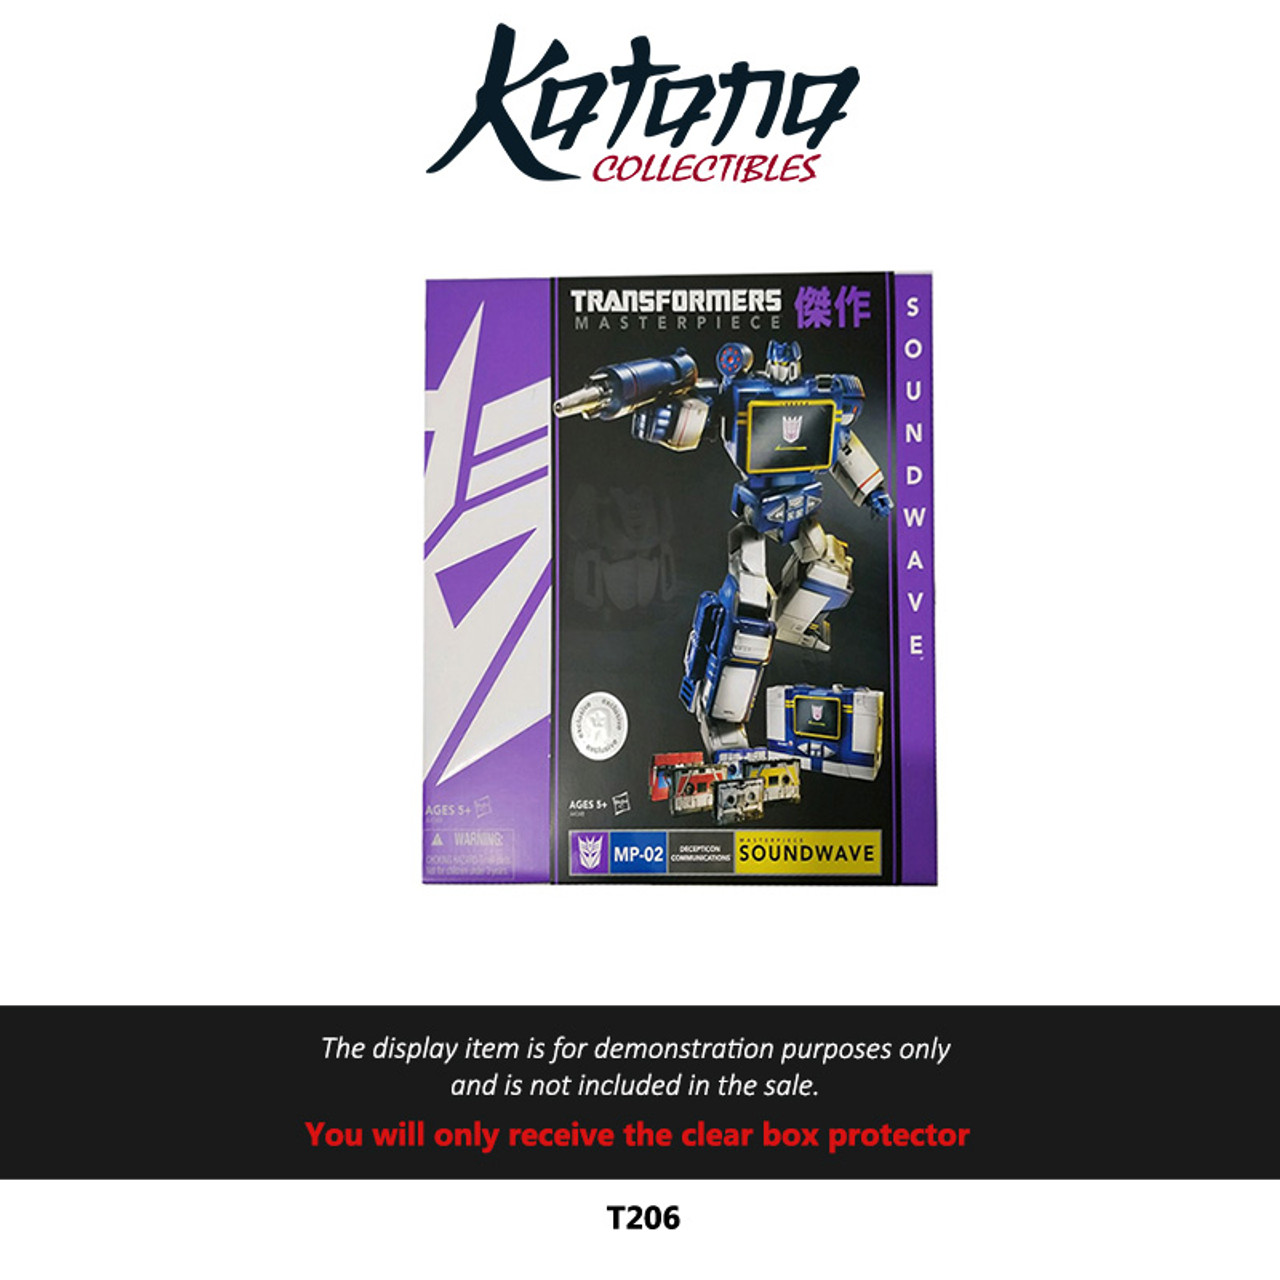 Katana Collectibles Protector For Transformers Masterpiece Soundwave MP-02 Decepticon Figure